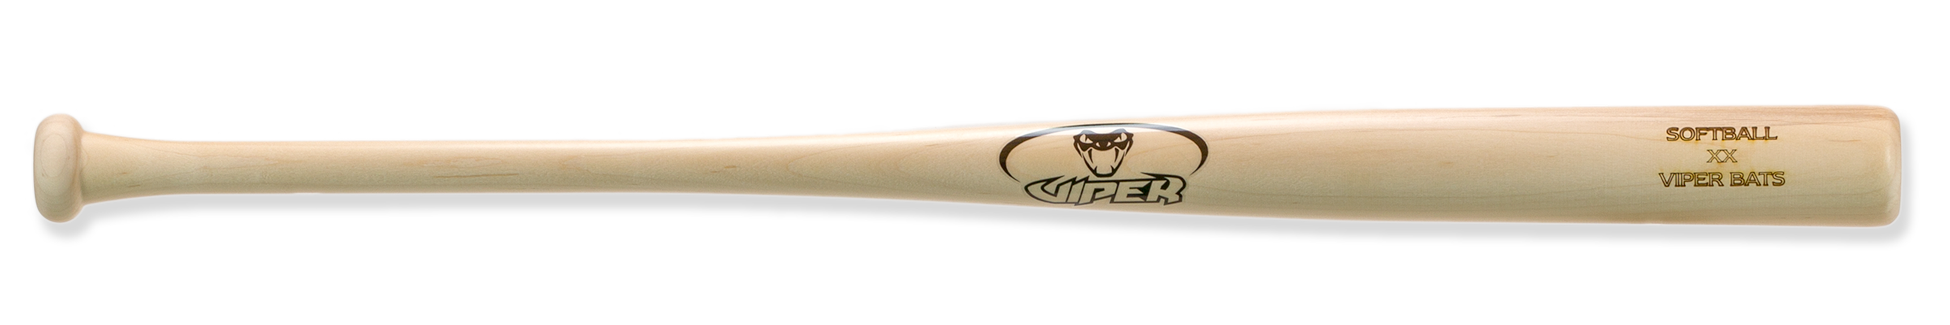 xx blemished wood softball bat